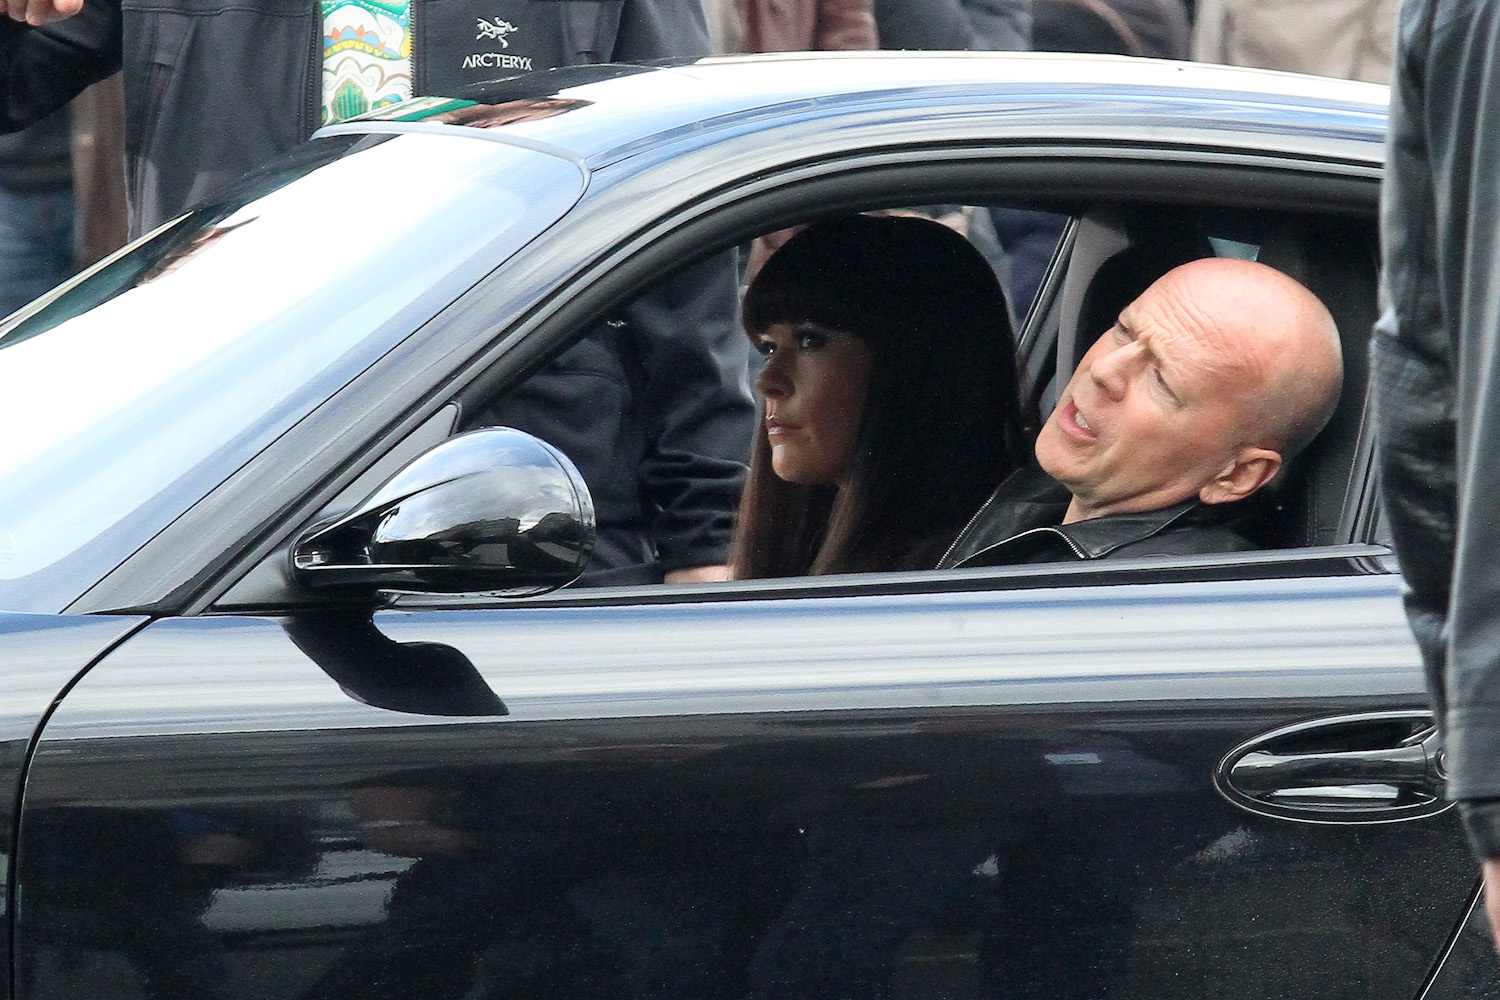 Bruce Willis filming a movie scene, driving a porsche sports car.